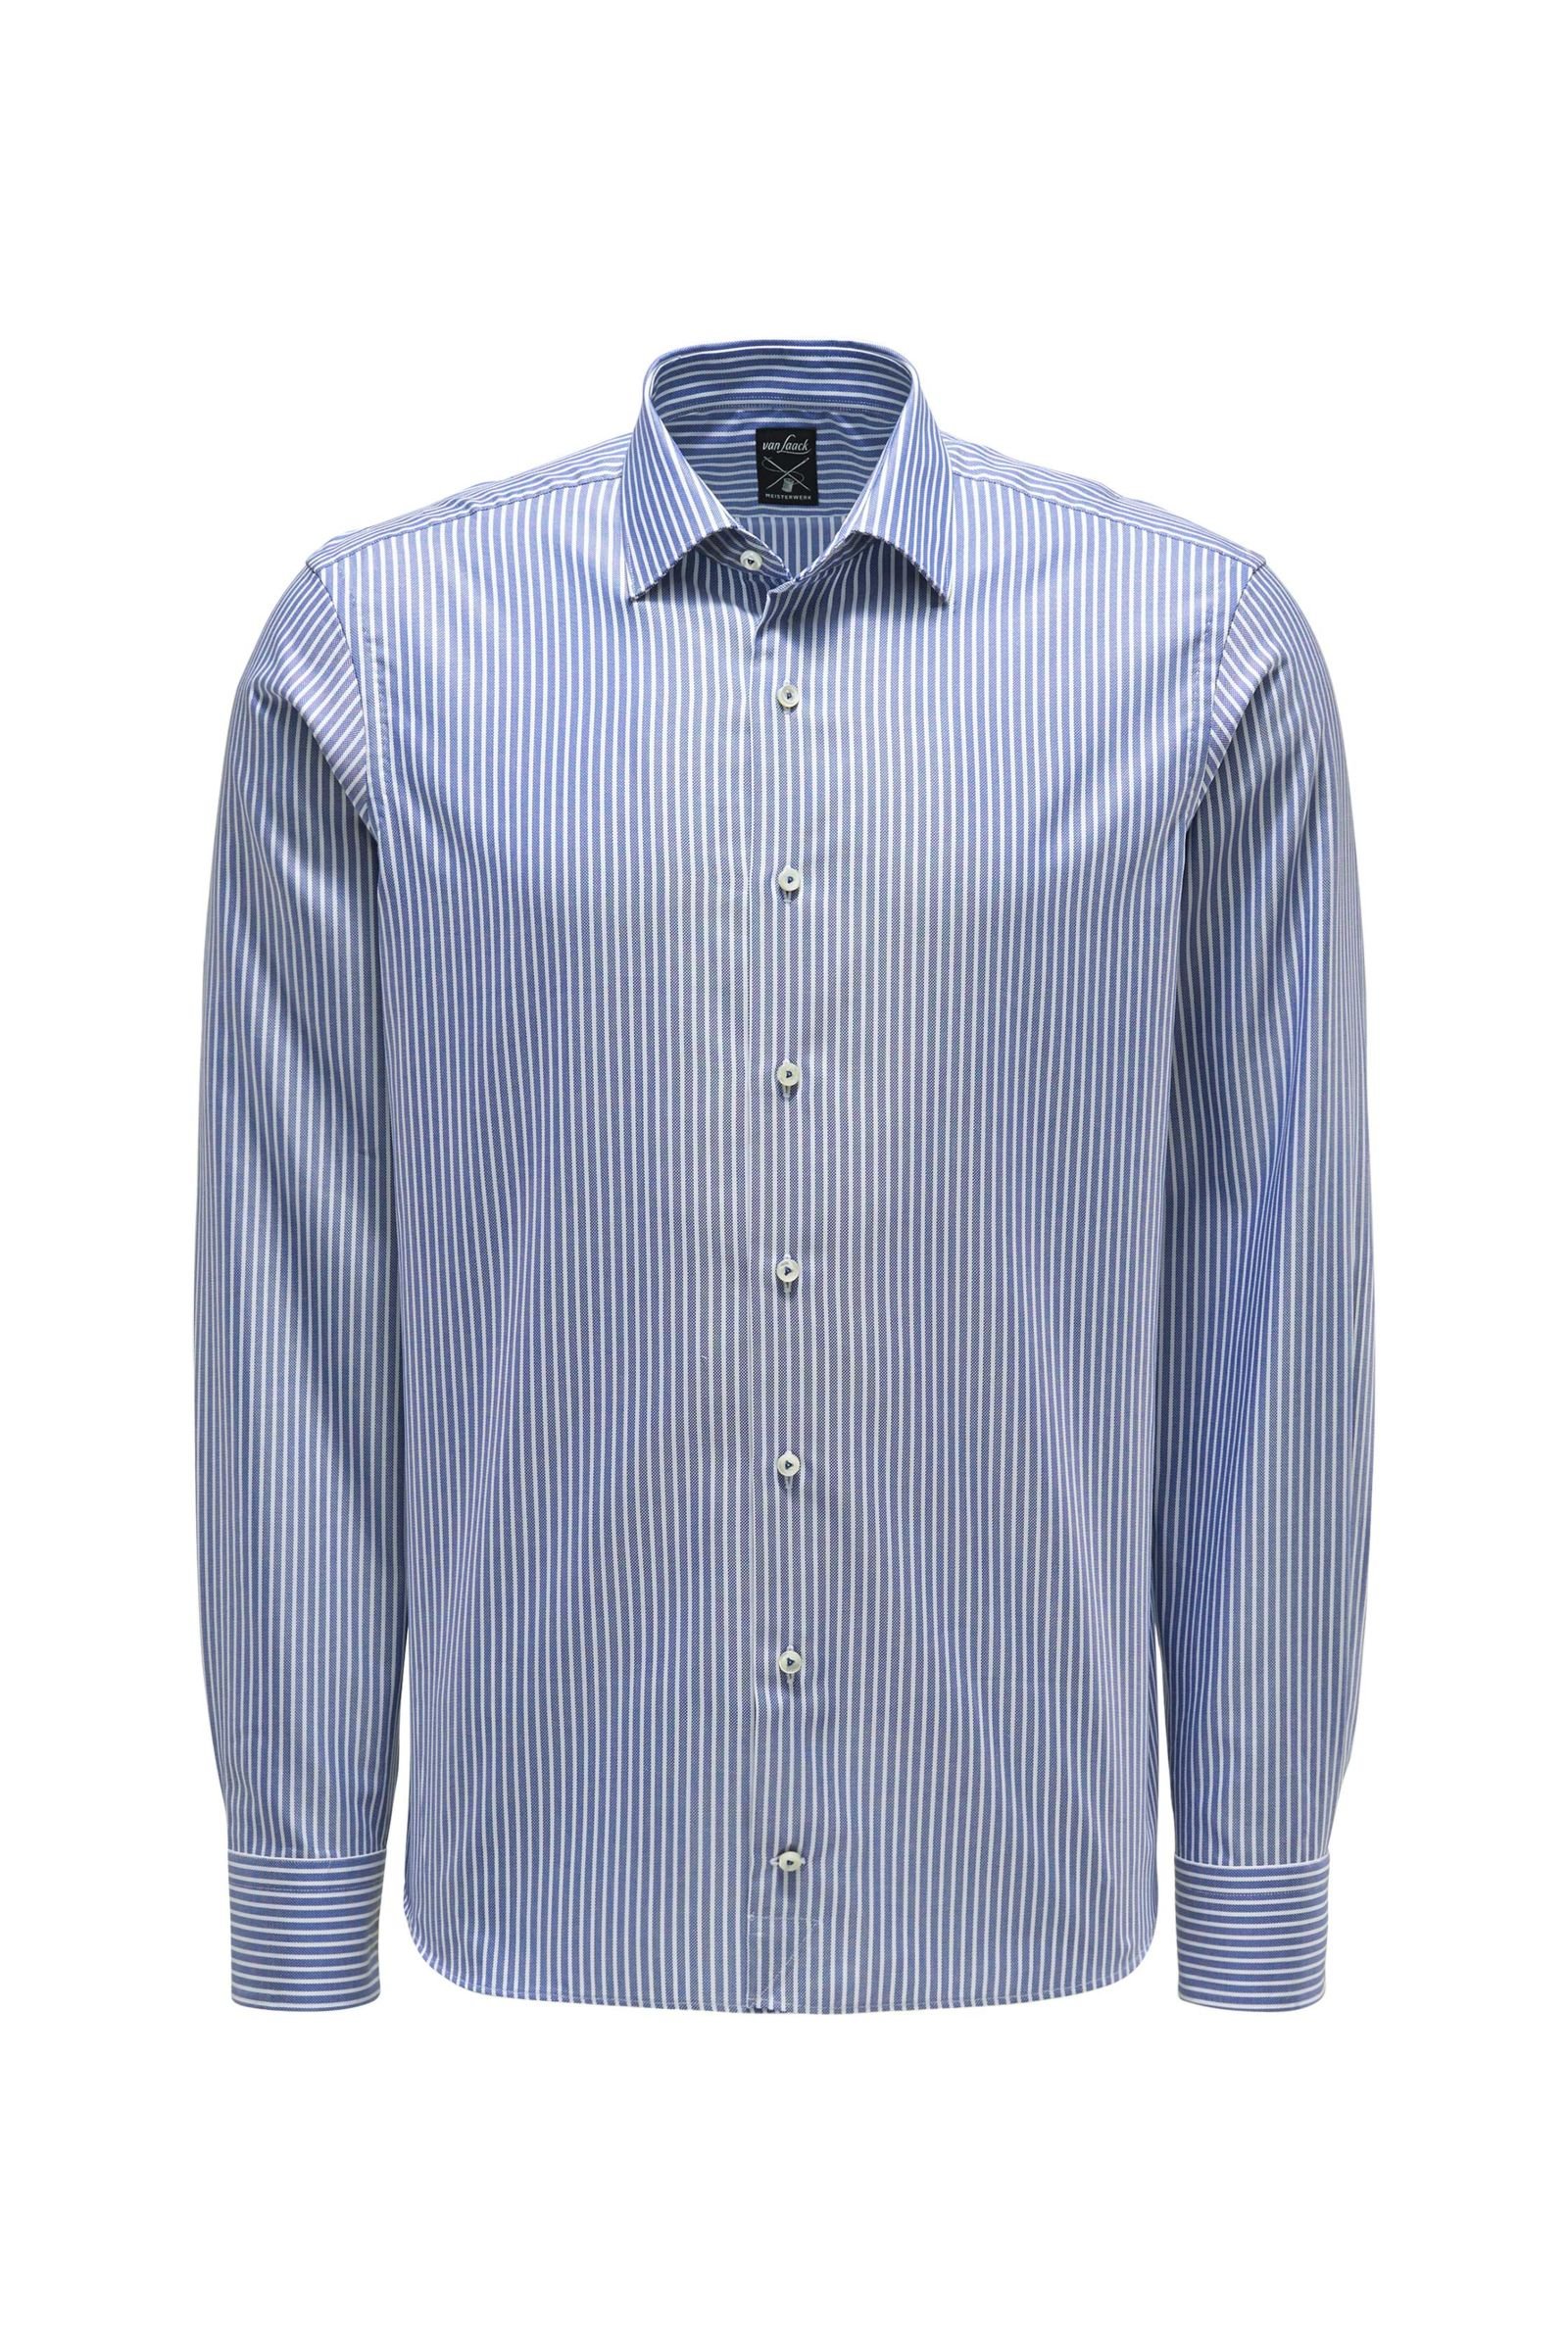 Oxford shirt 'Malin' with slim collar blue/white striped